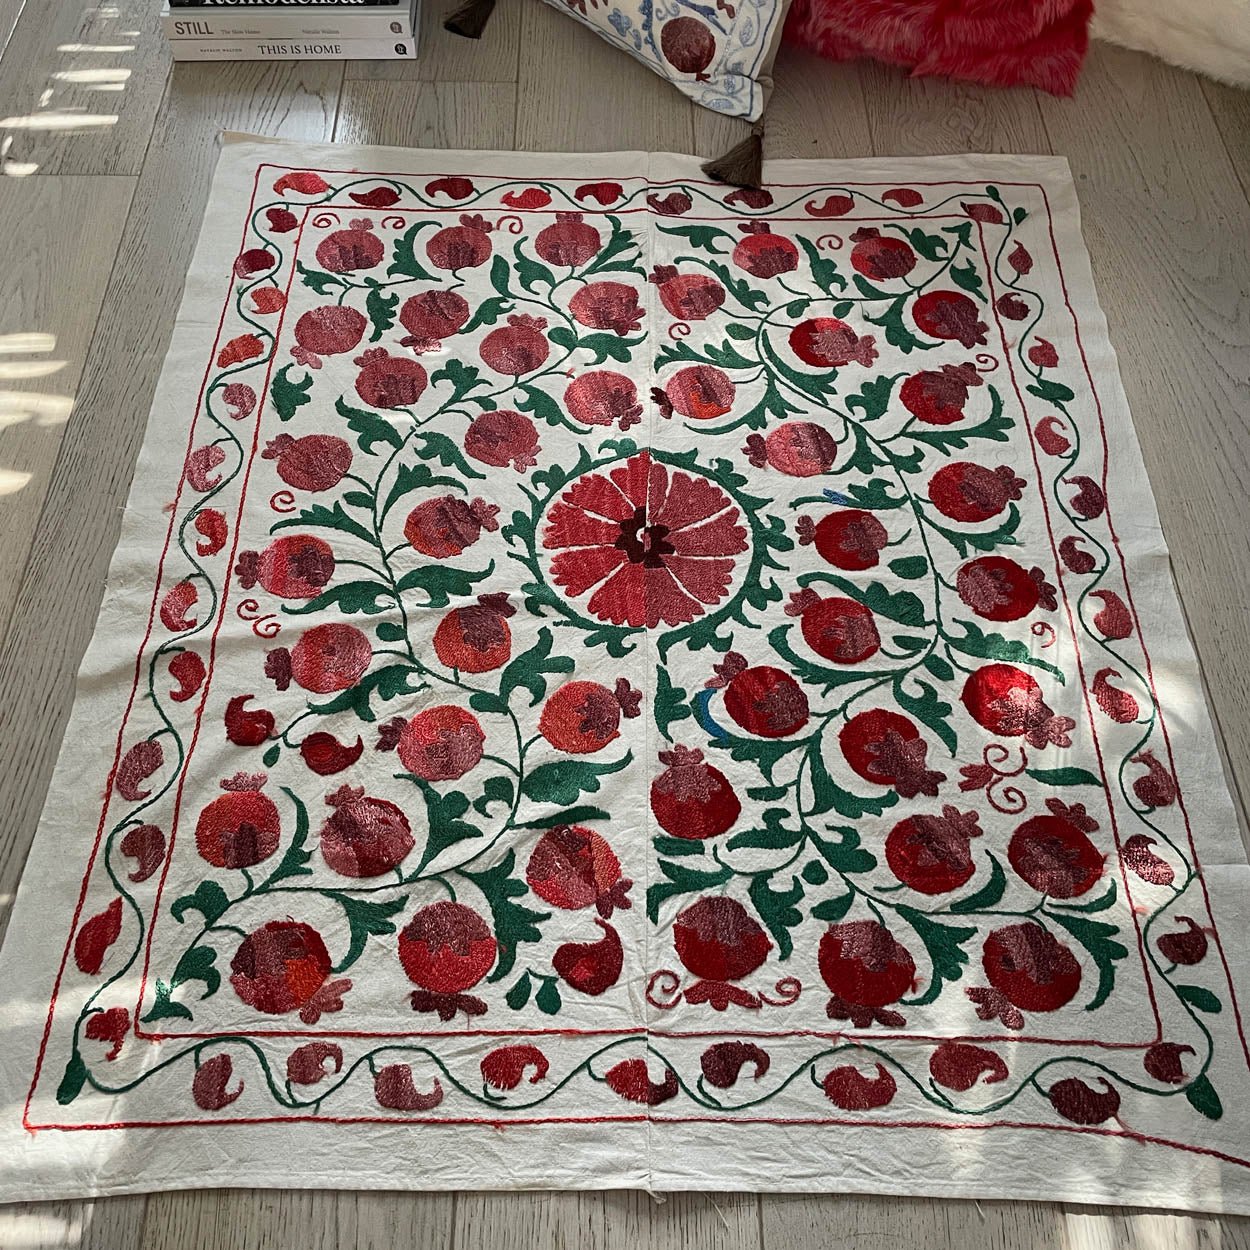 Uzbeki Suzani Hand Embroidered Textile Wall Hanging | Home Décor | Runner | 110cm x 96cm SUZ220518013 - Wildash London